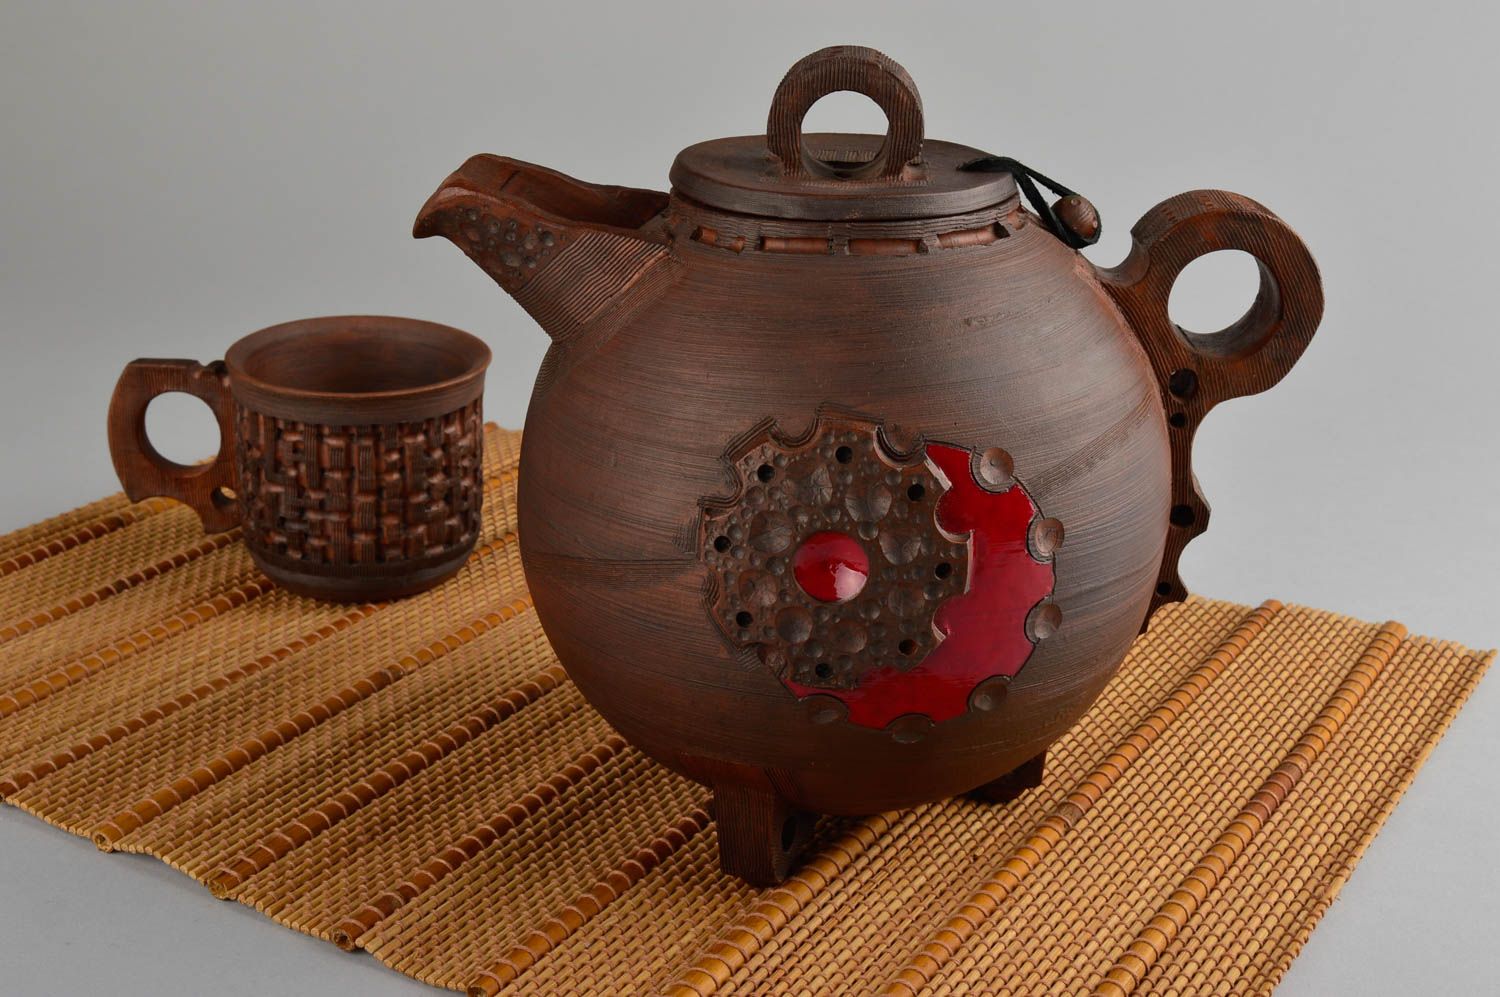 Unusual handmade ceramic teapot clay teapot design kitchen supplies ideas photo 1